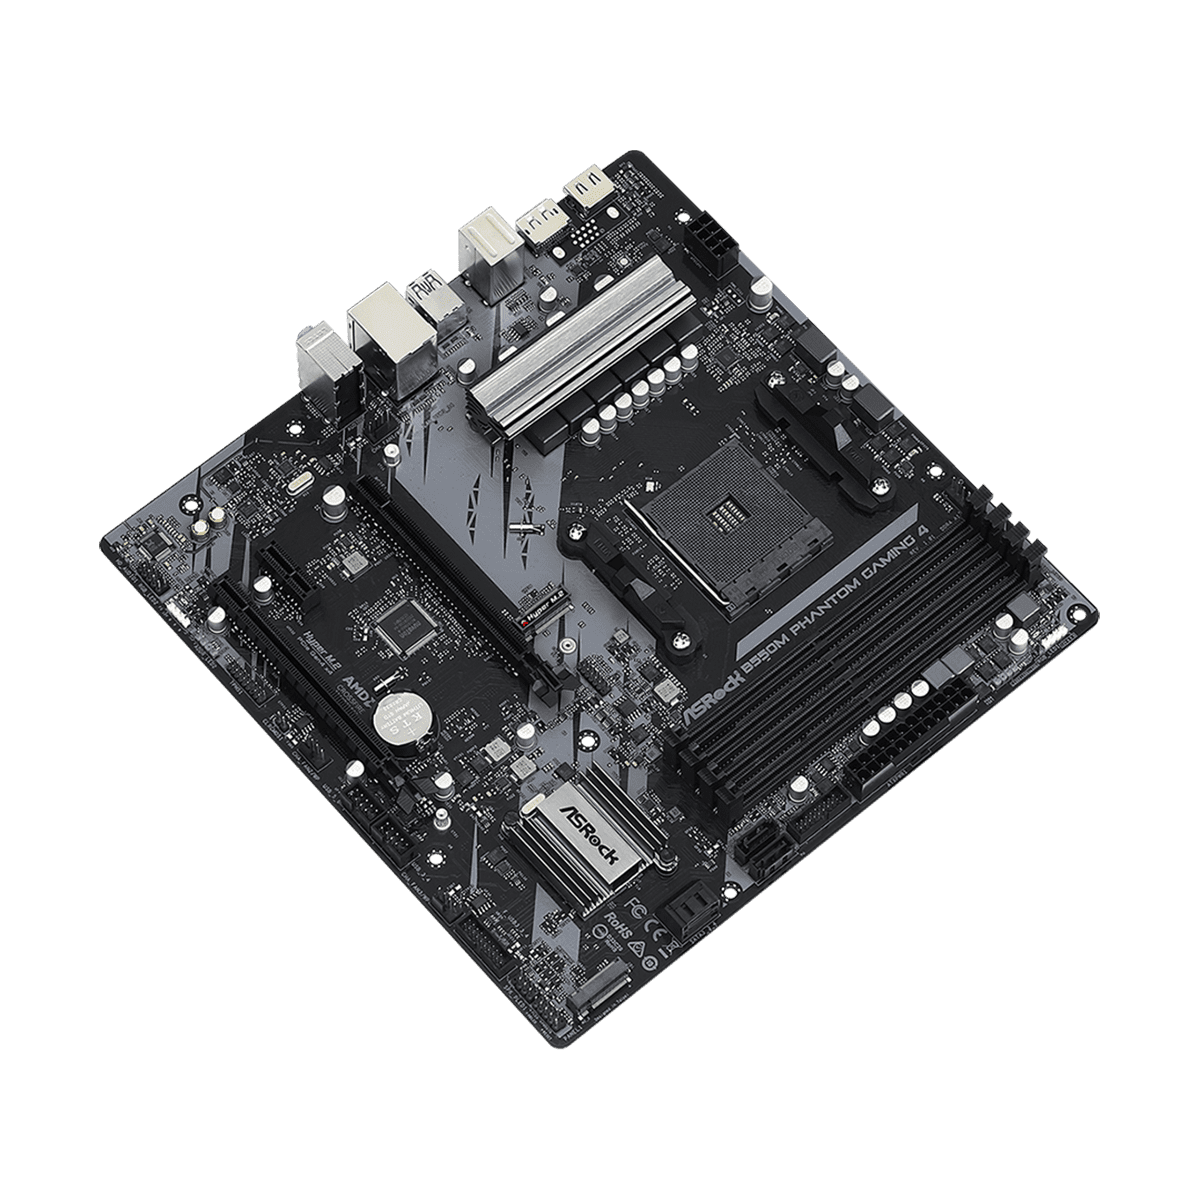 B550M Phantom Gaming 4 | ASRock(アスロック) Socket AM4 AMD B550